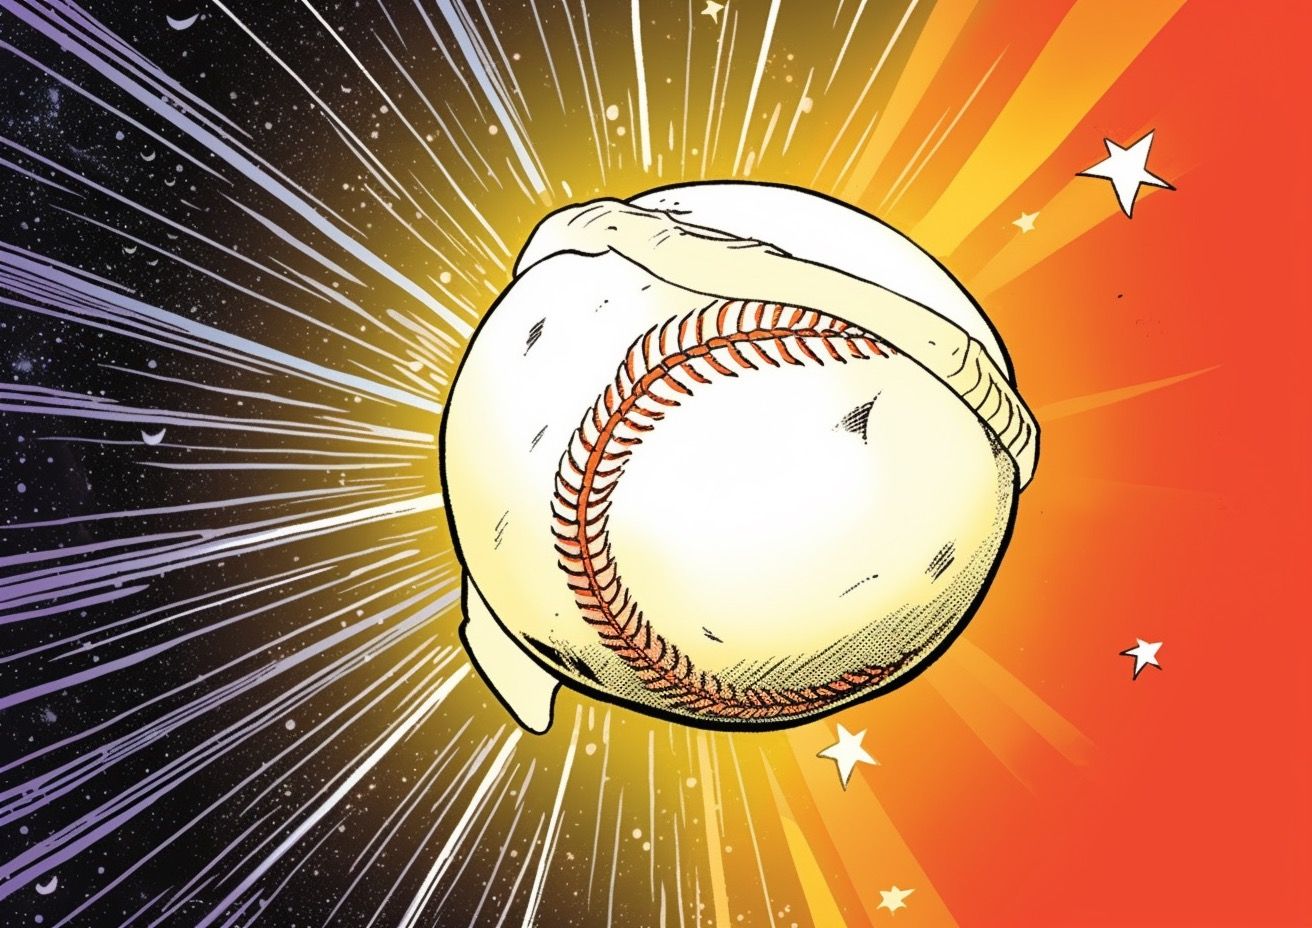 Major League Baseball Expansion on the Horizon?